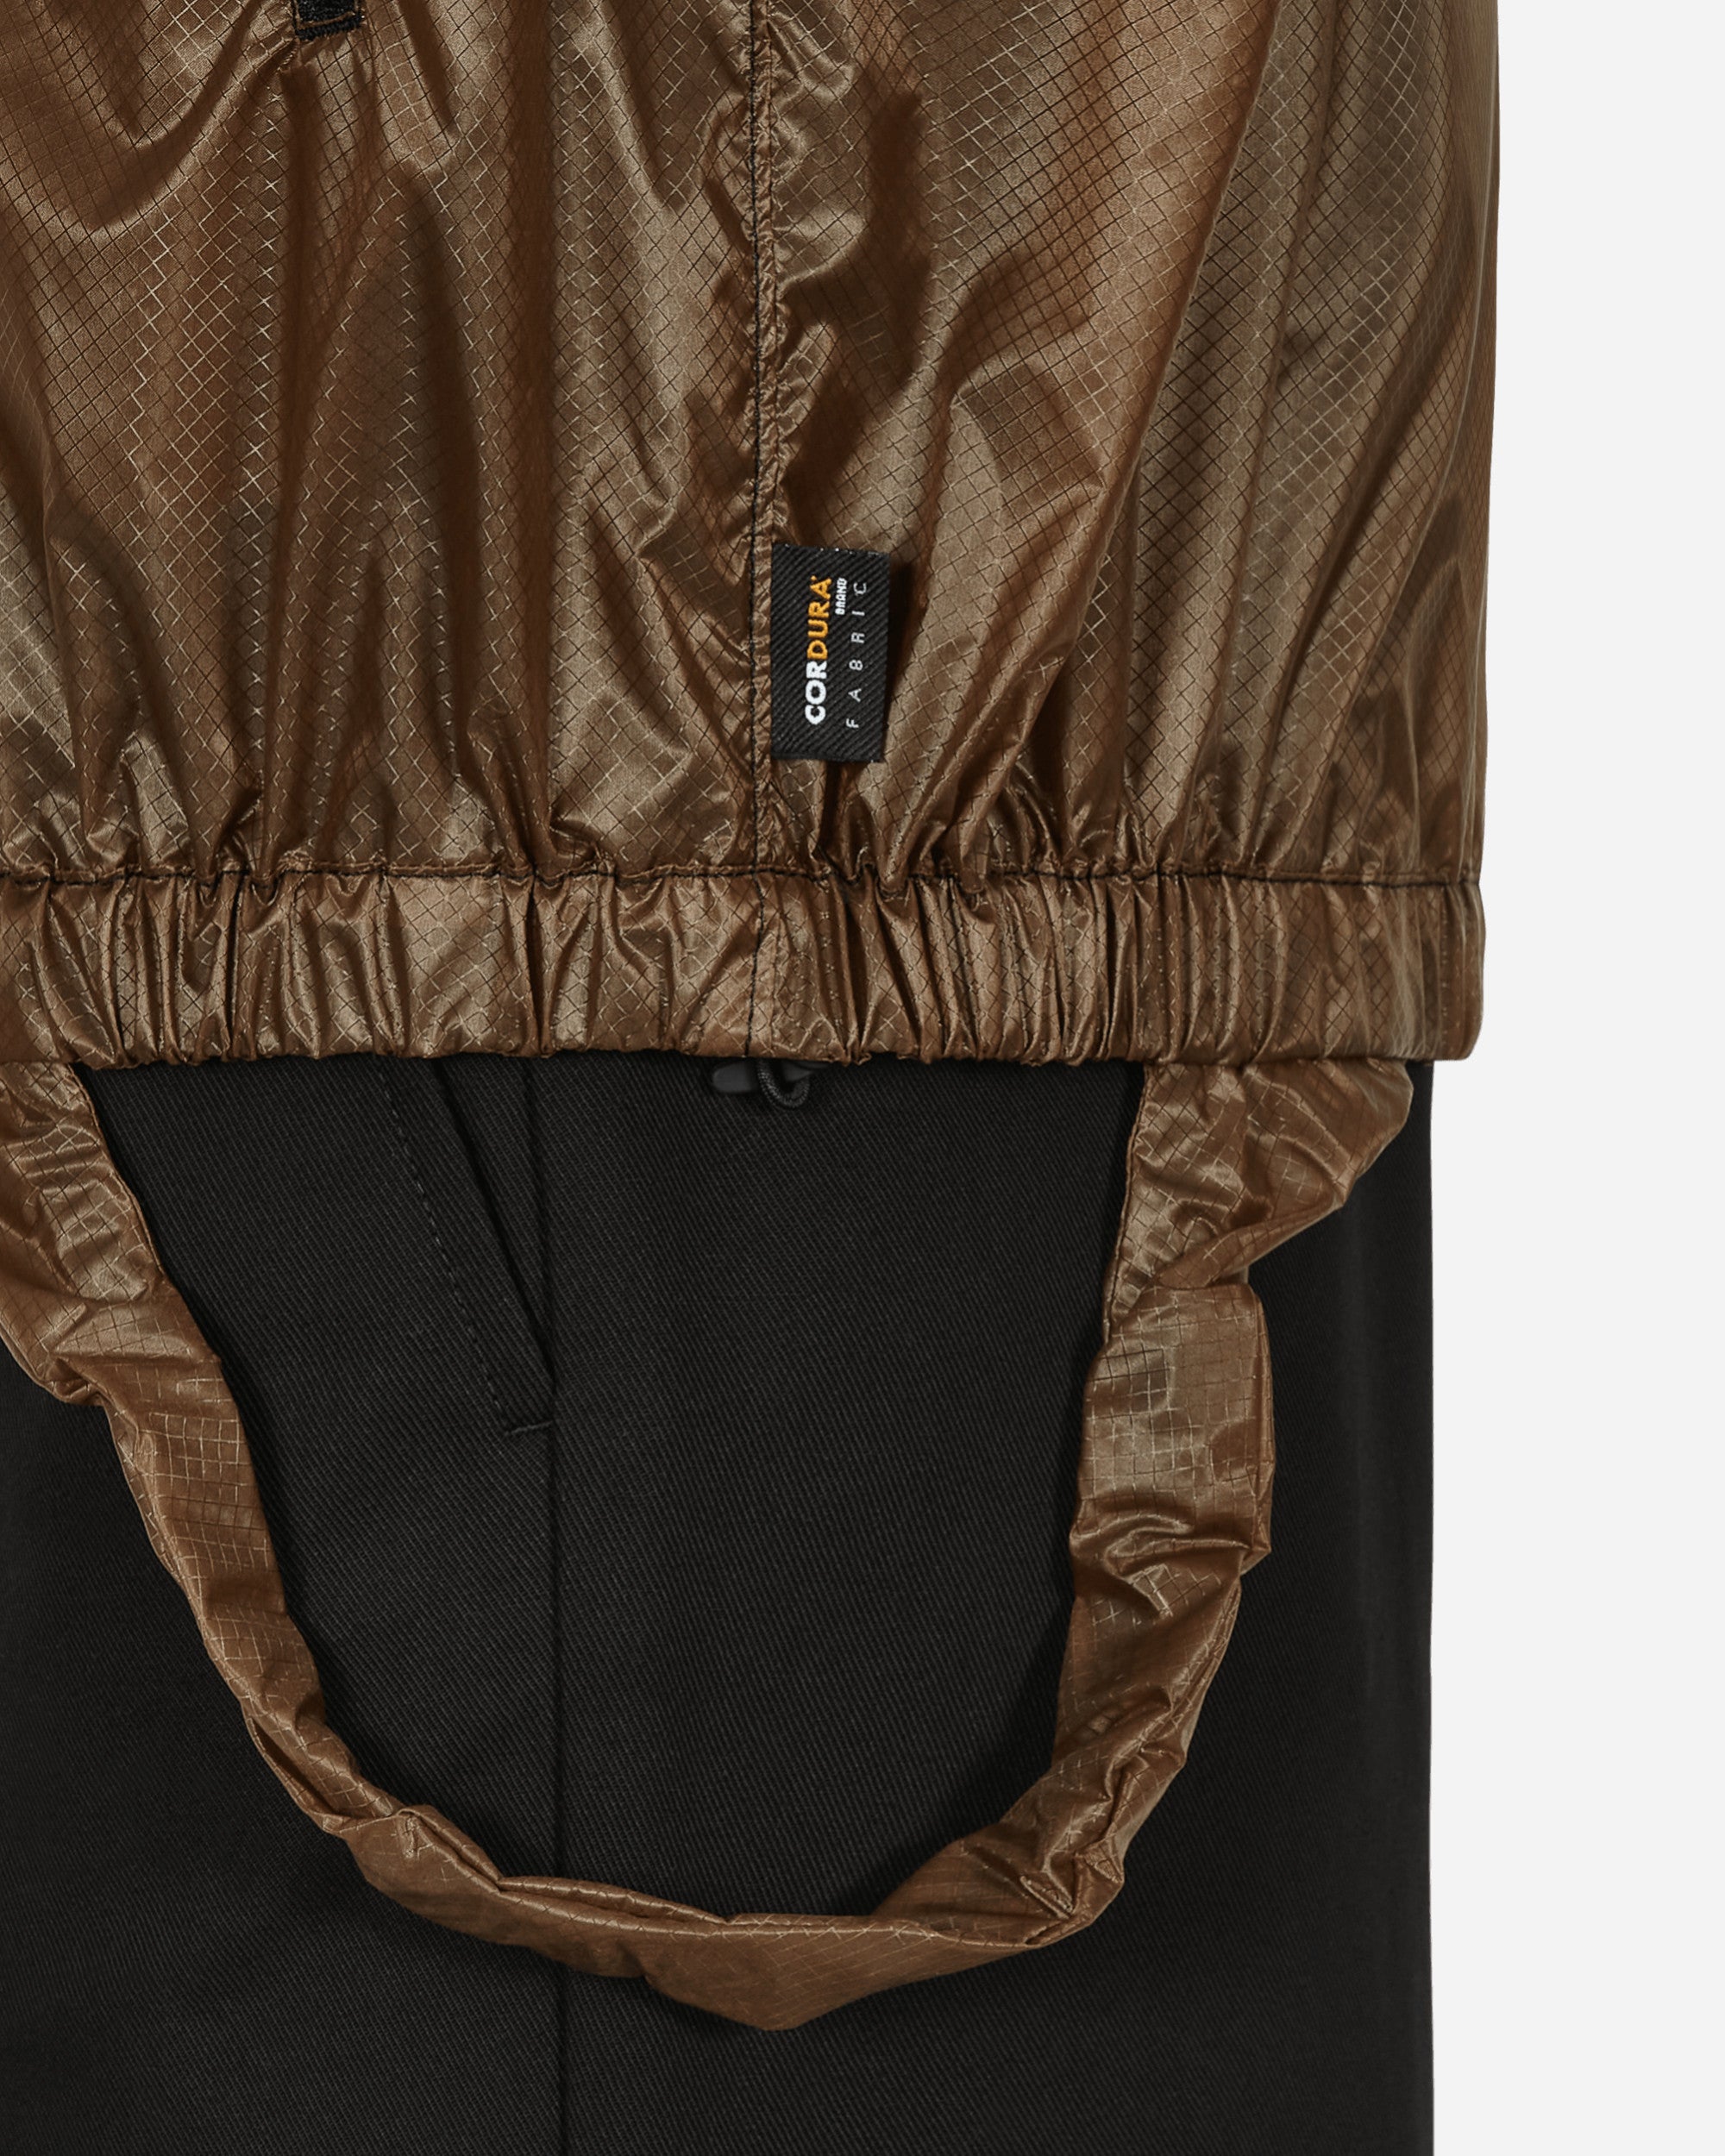 Undercover Blouson Khaki Coats and Jackets Jackets UC1B4202 KHAKI